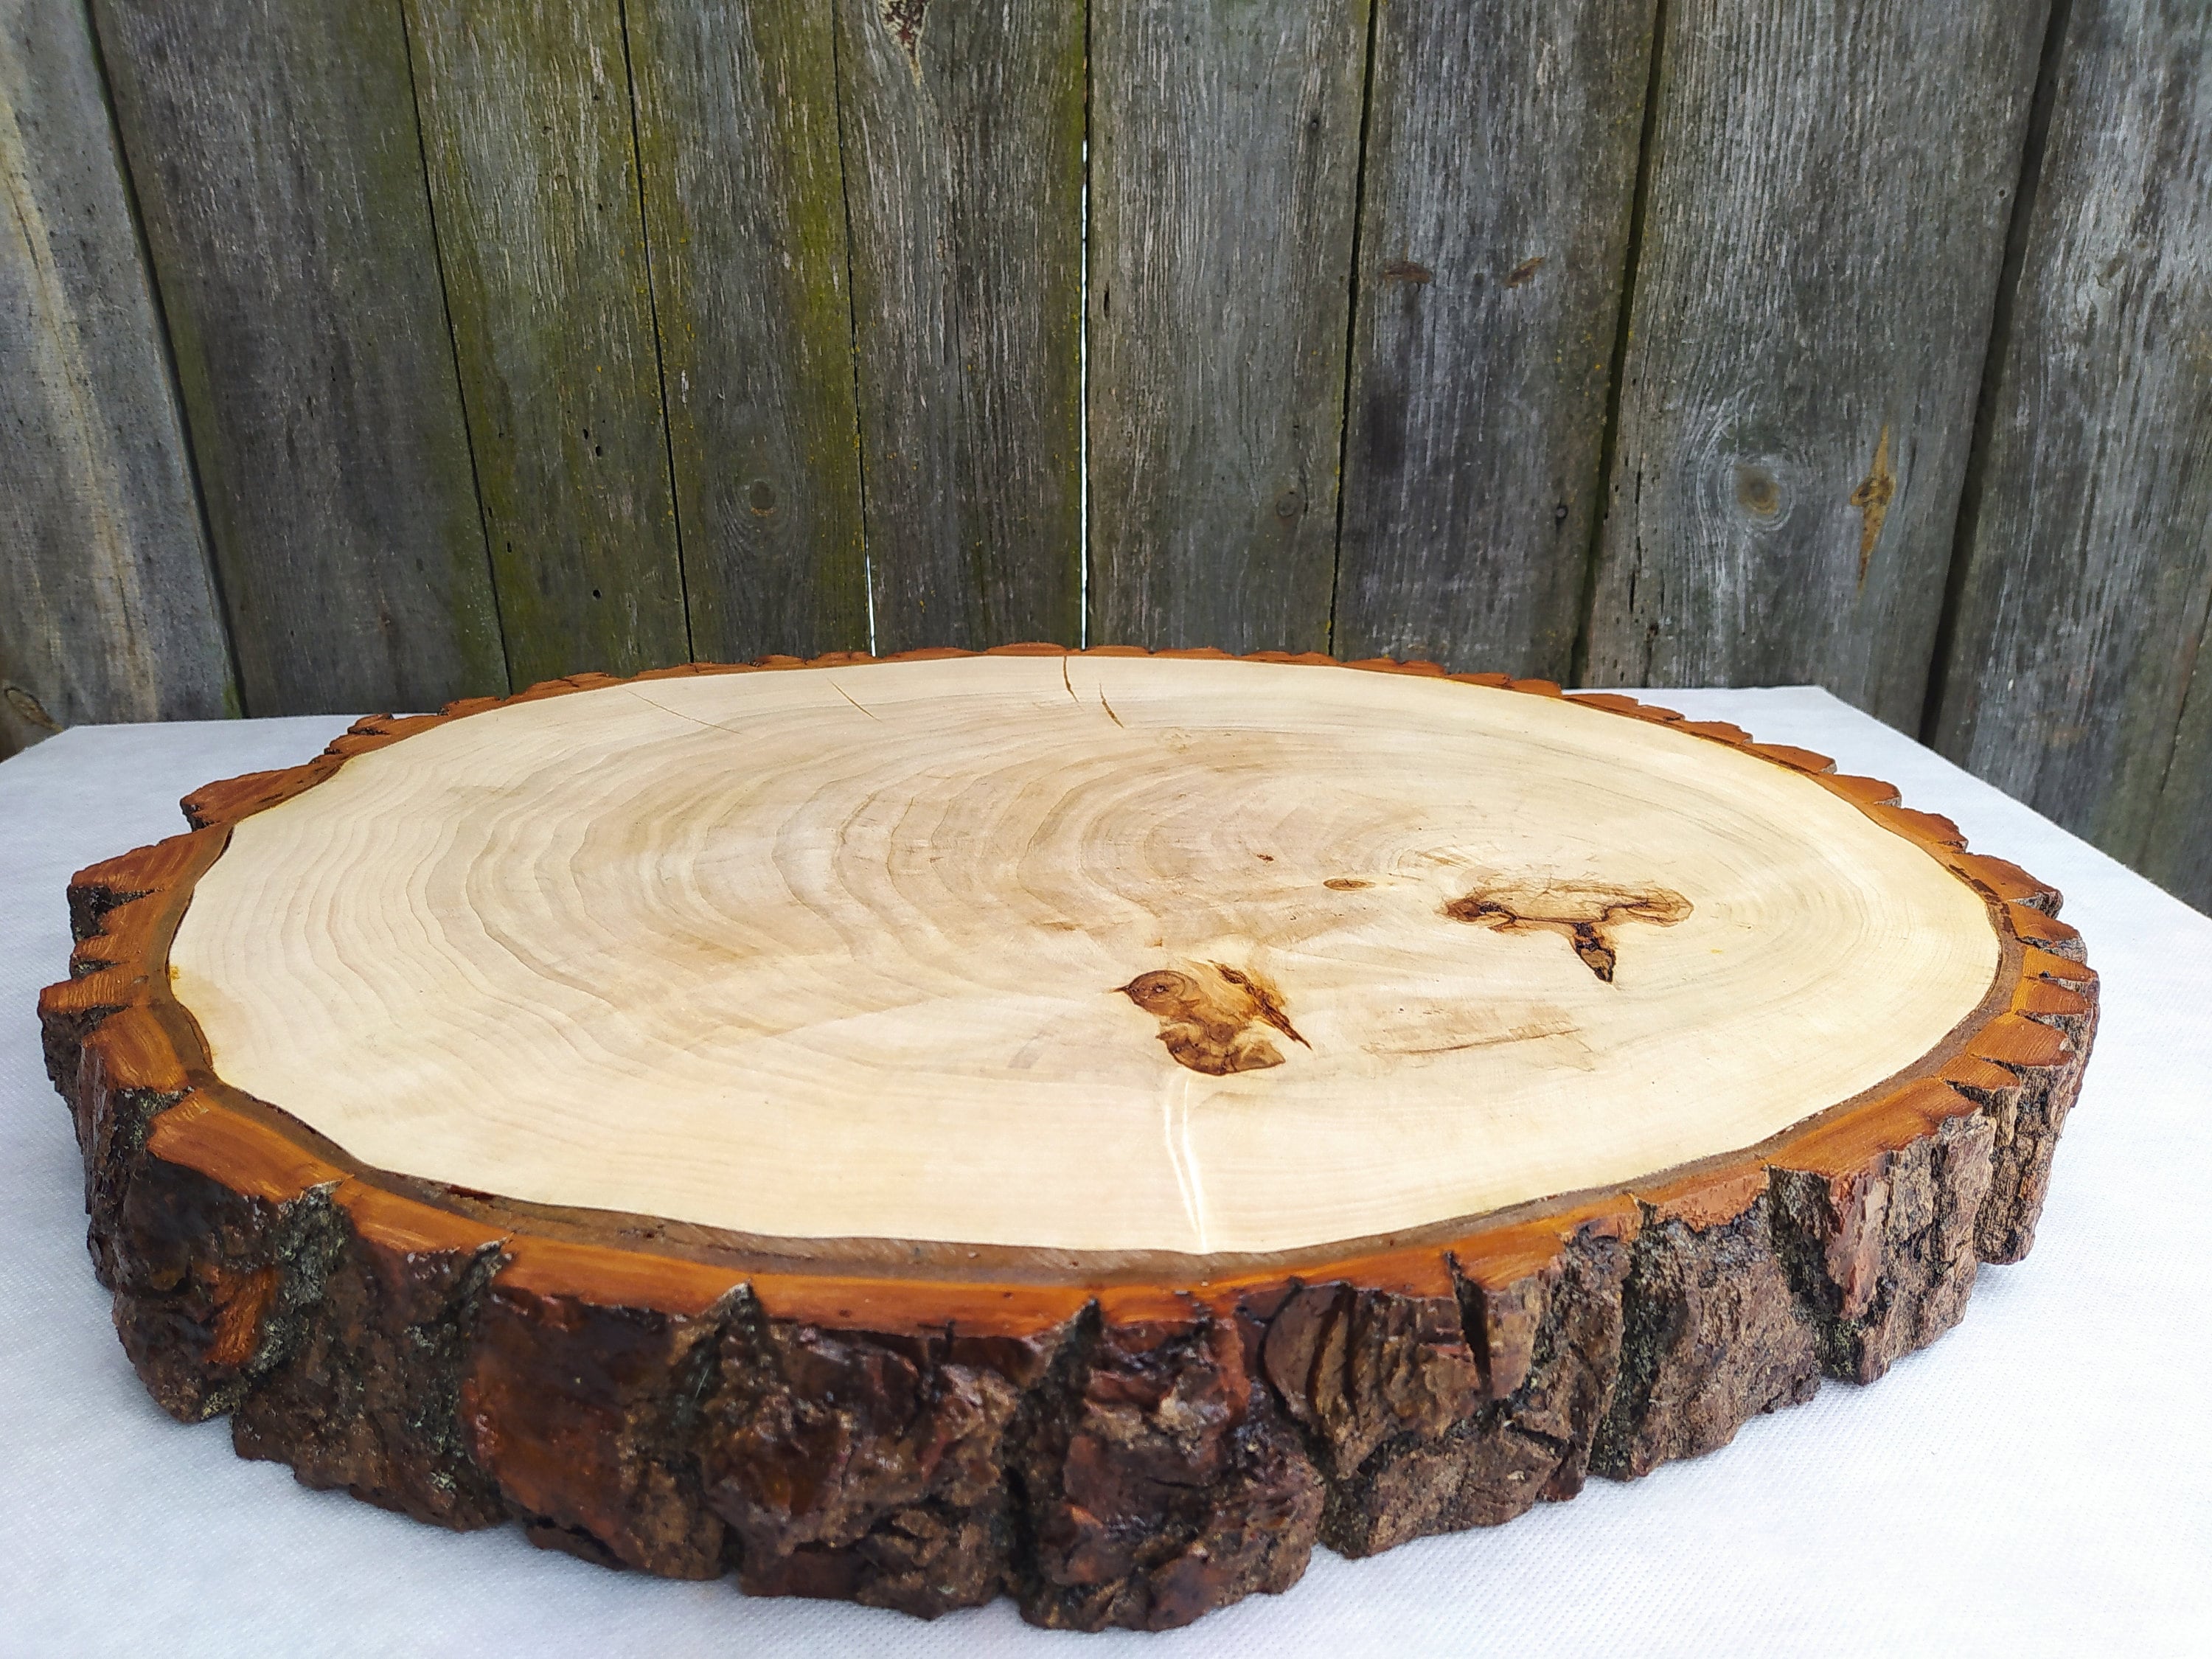 1 piece Tree slices (Dia.29~30cm) rough cut rounds natural Wood